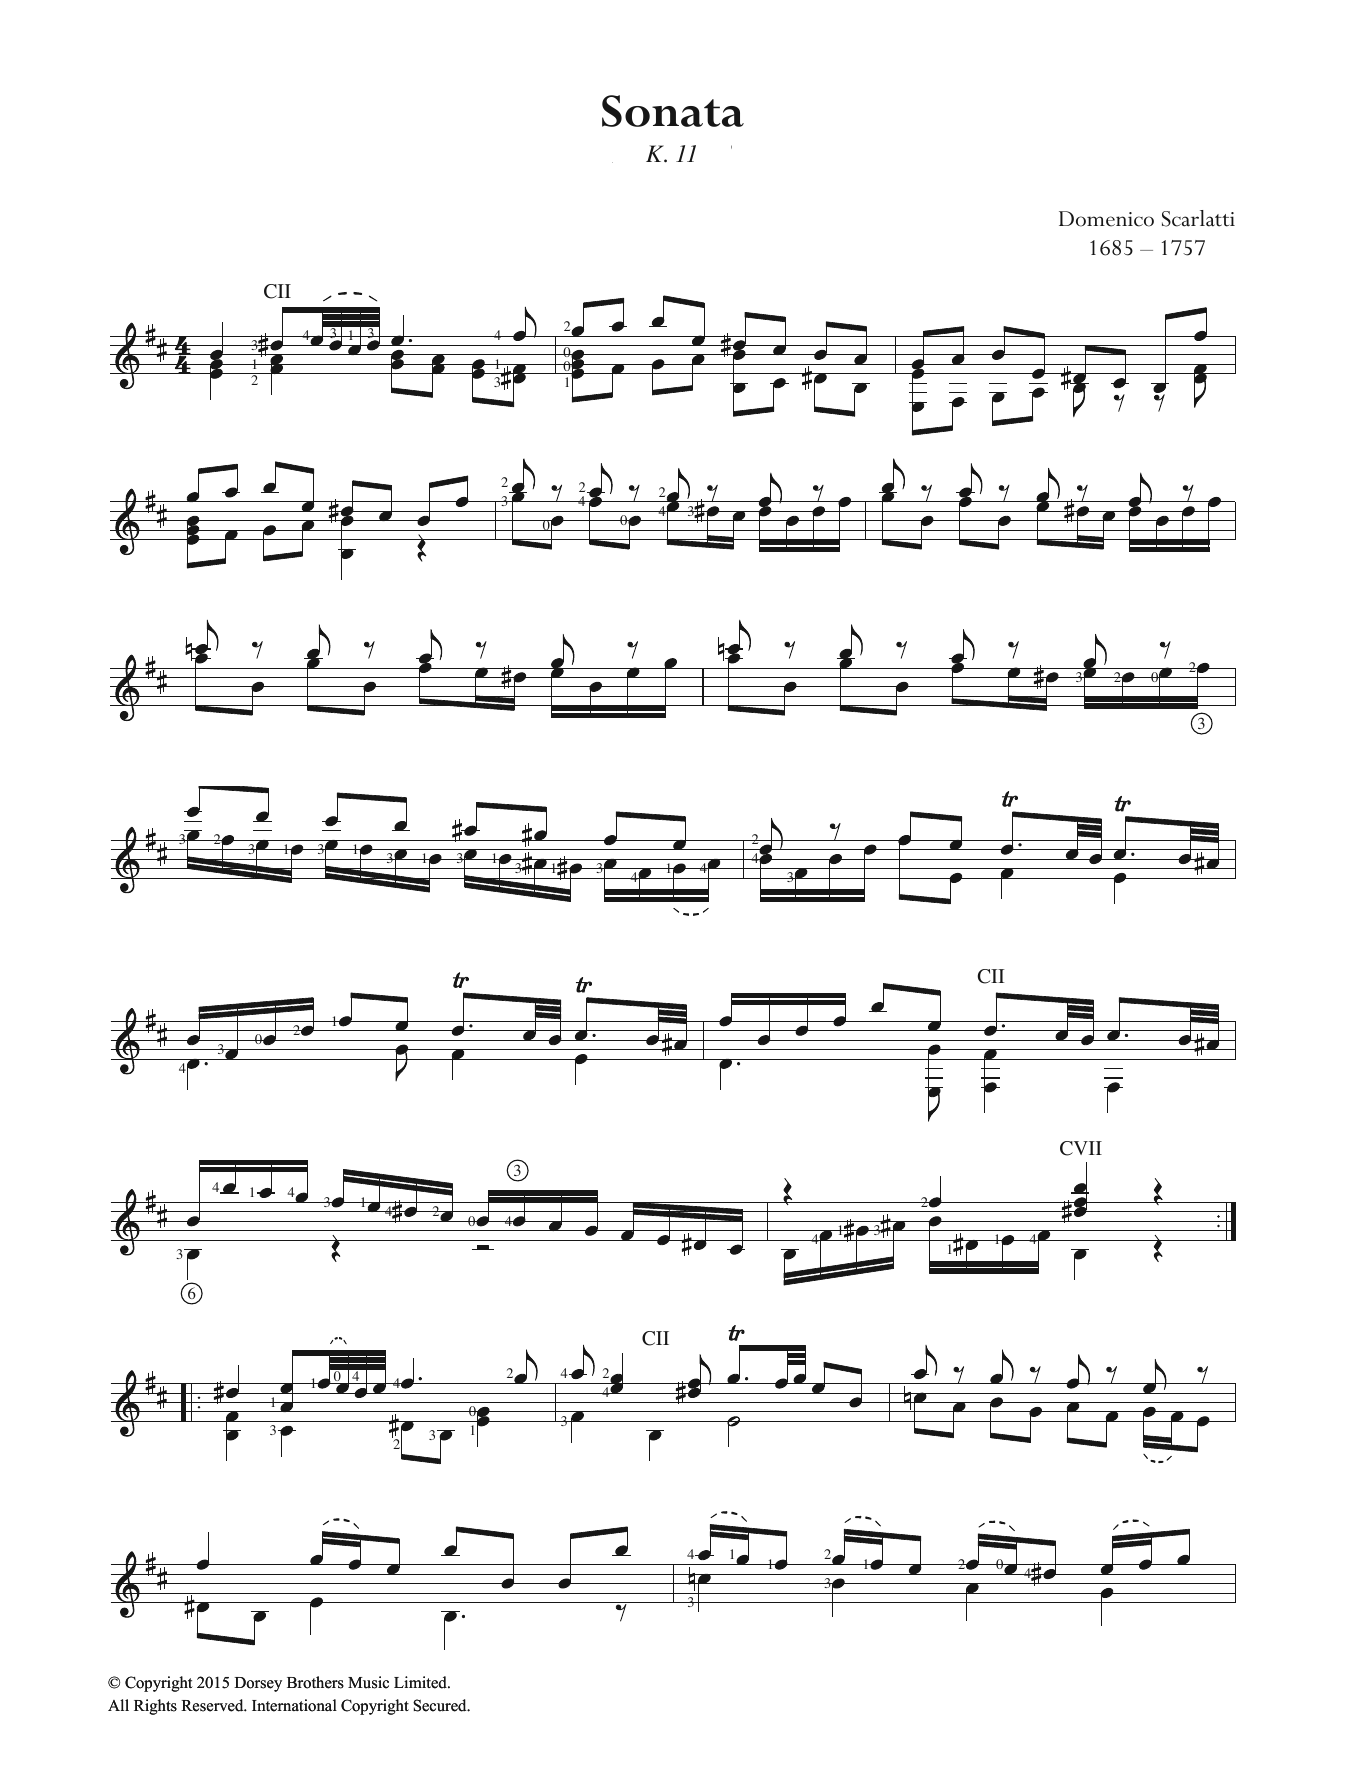 Download Domenico Scarlatti Sonata K.11 Sheet Music and learn how to play Guitar PDF digital score in minutes